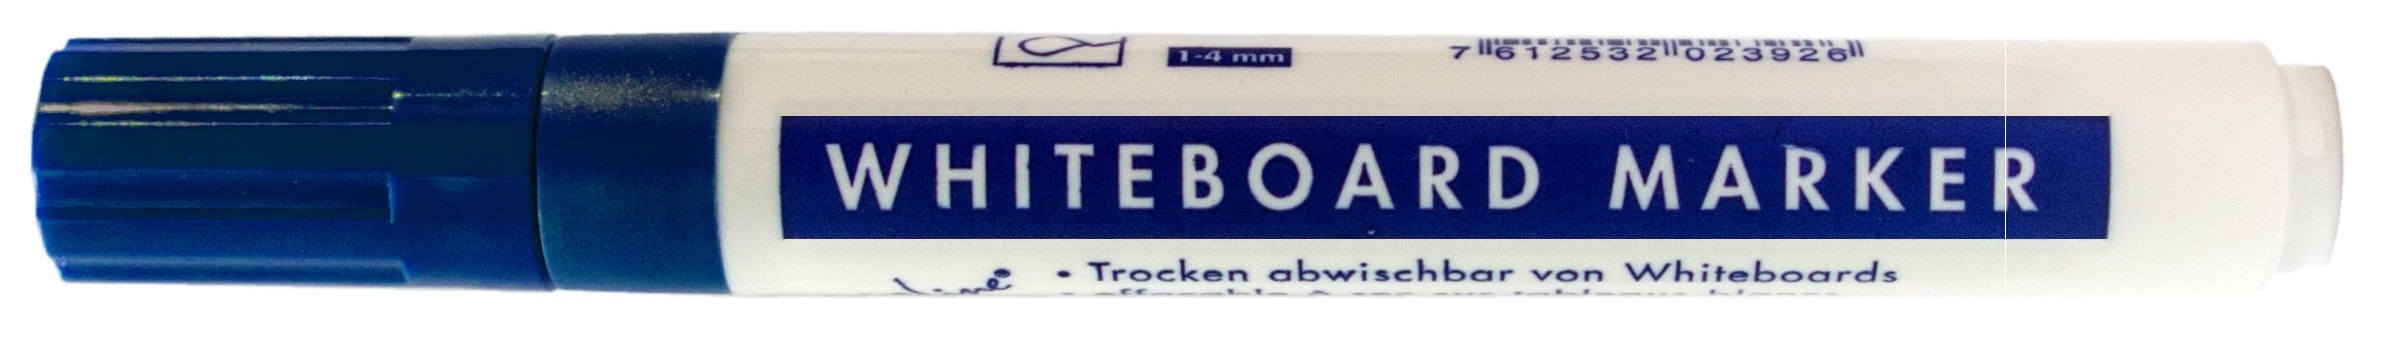 BÜROLINE Whiteboard Marker 1-4mm 223001 bleu